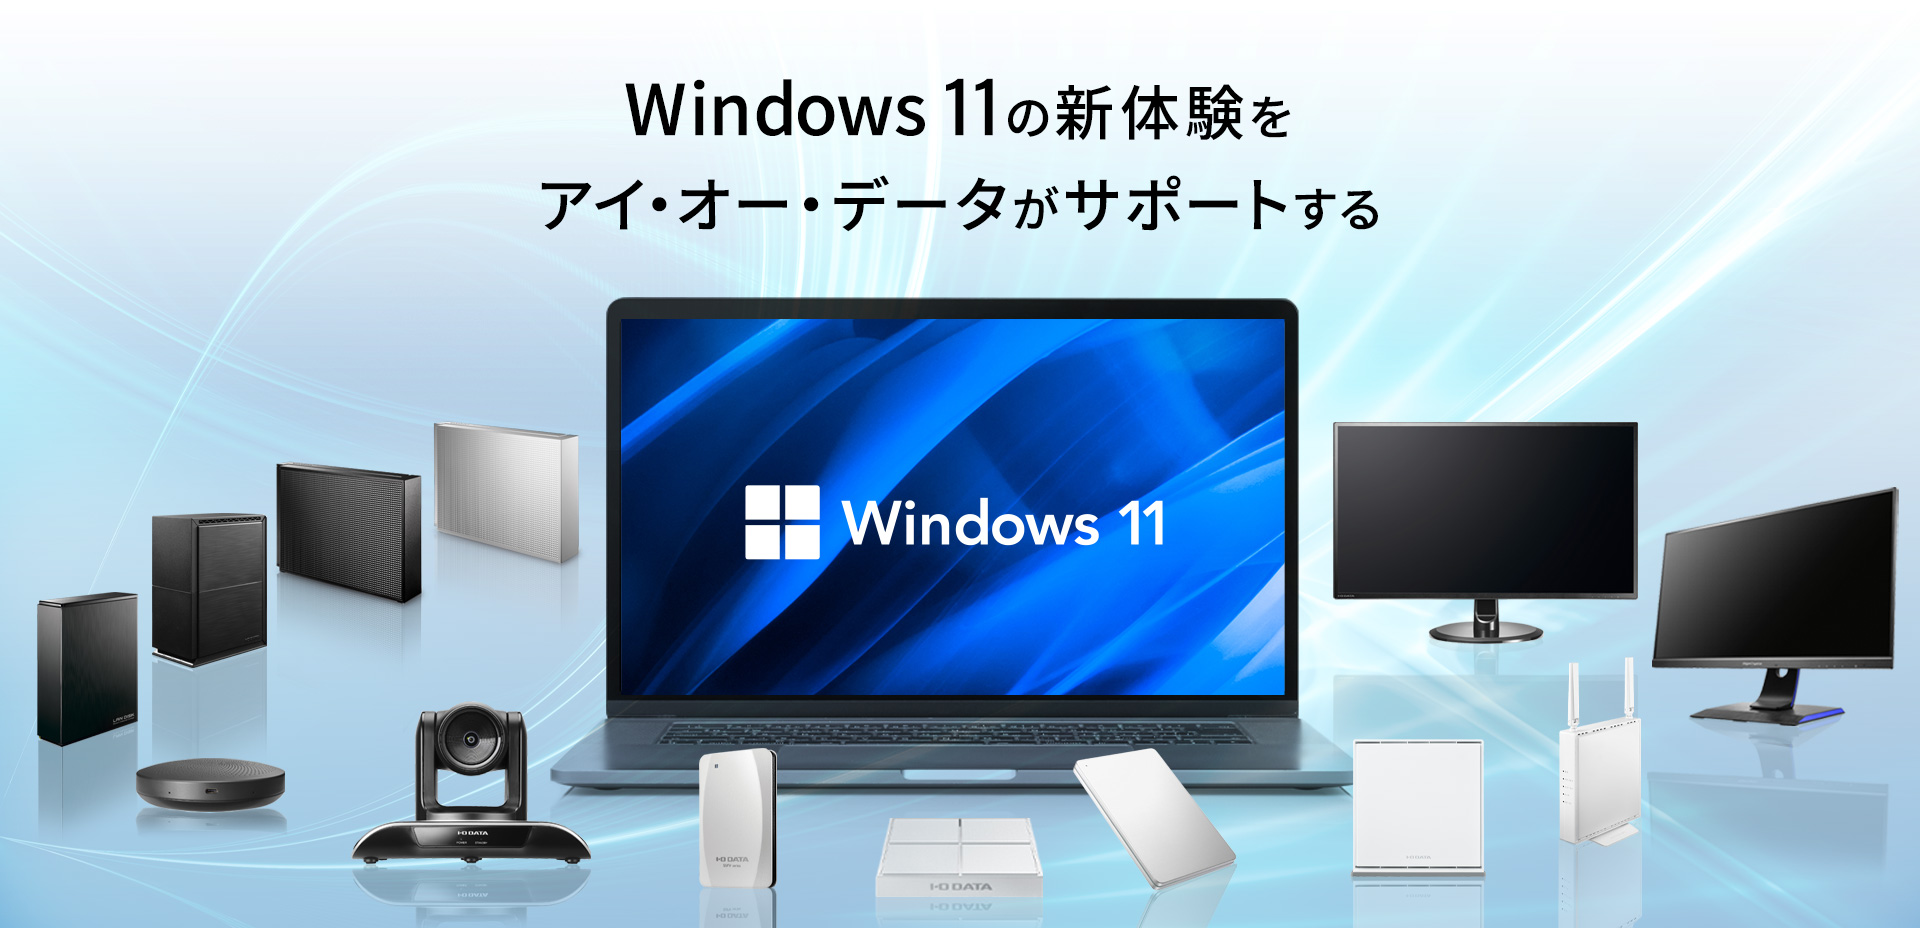 Windows 11とI-O DATAの周辺機器